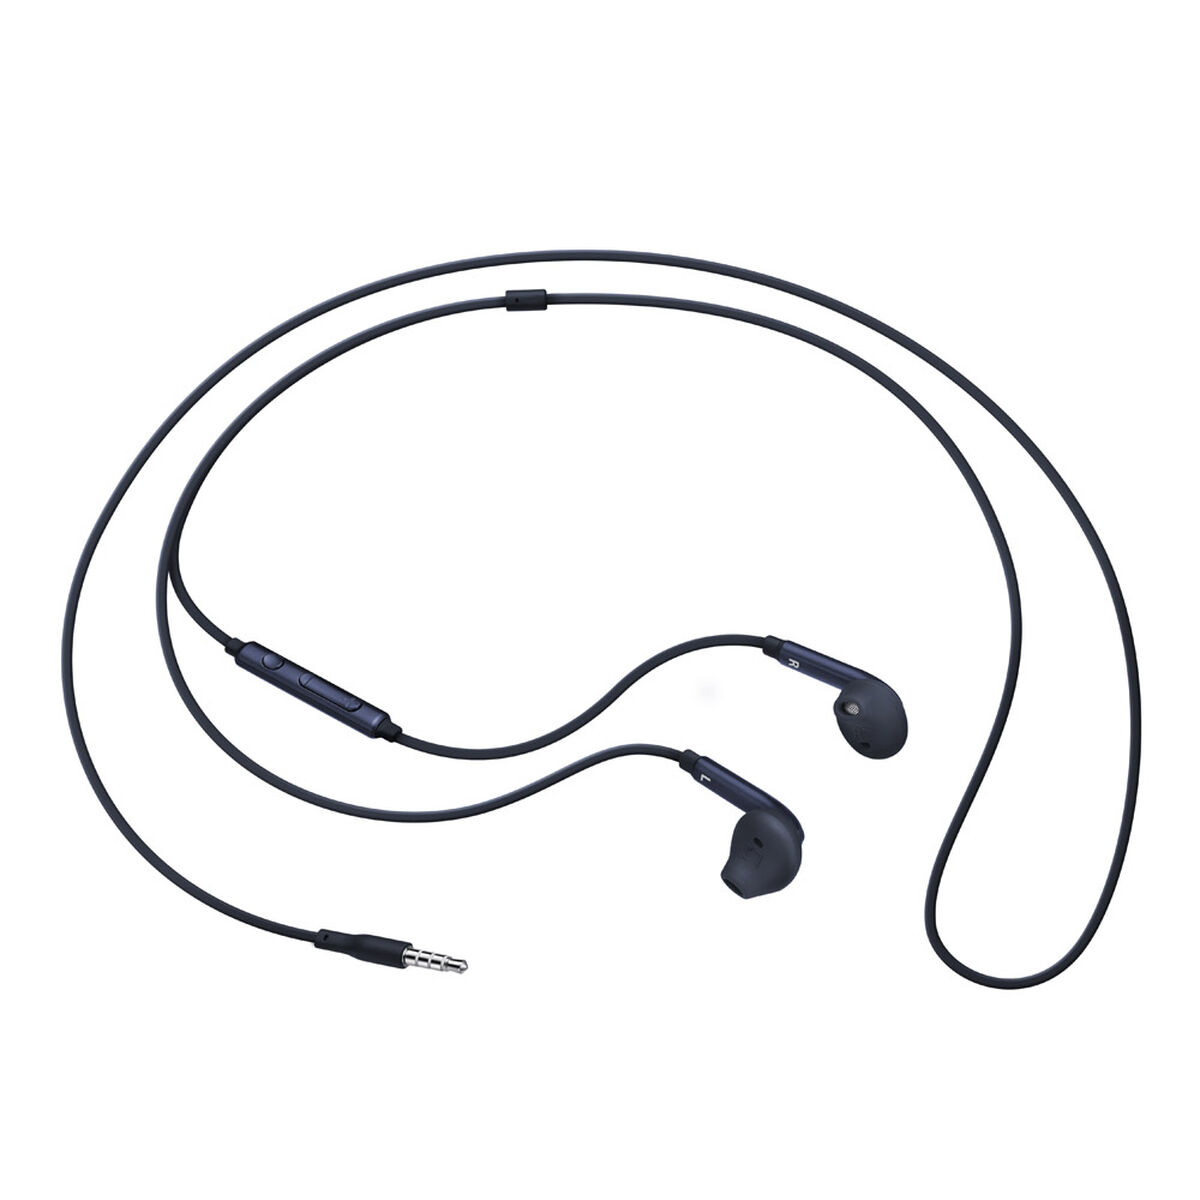 Audífonos In ear Samsung Fit EG920 Negros